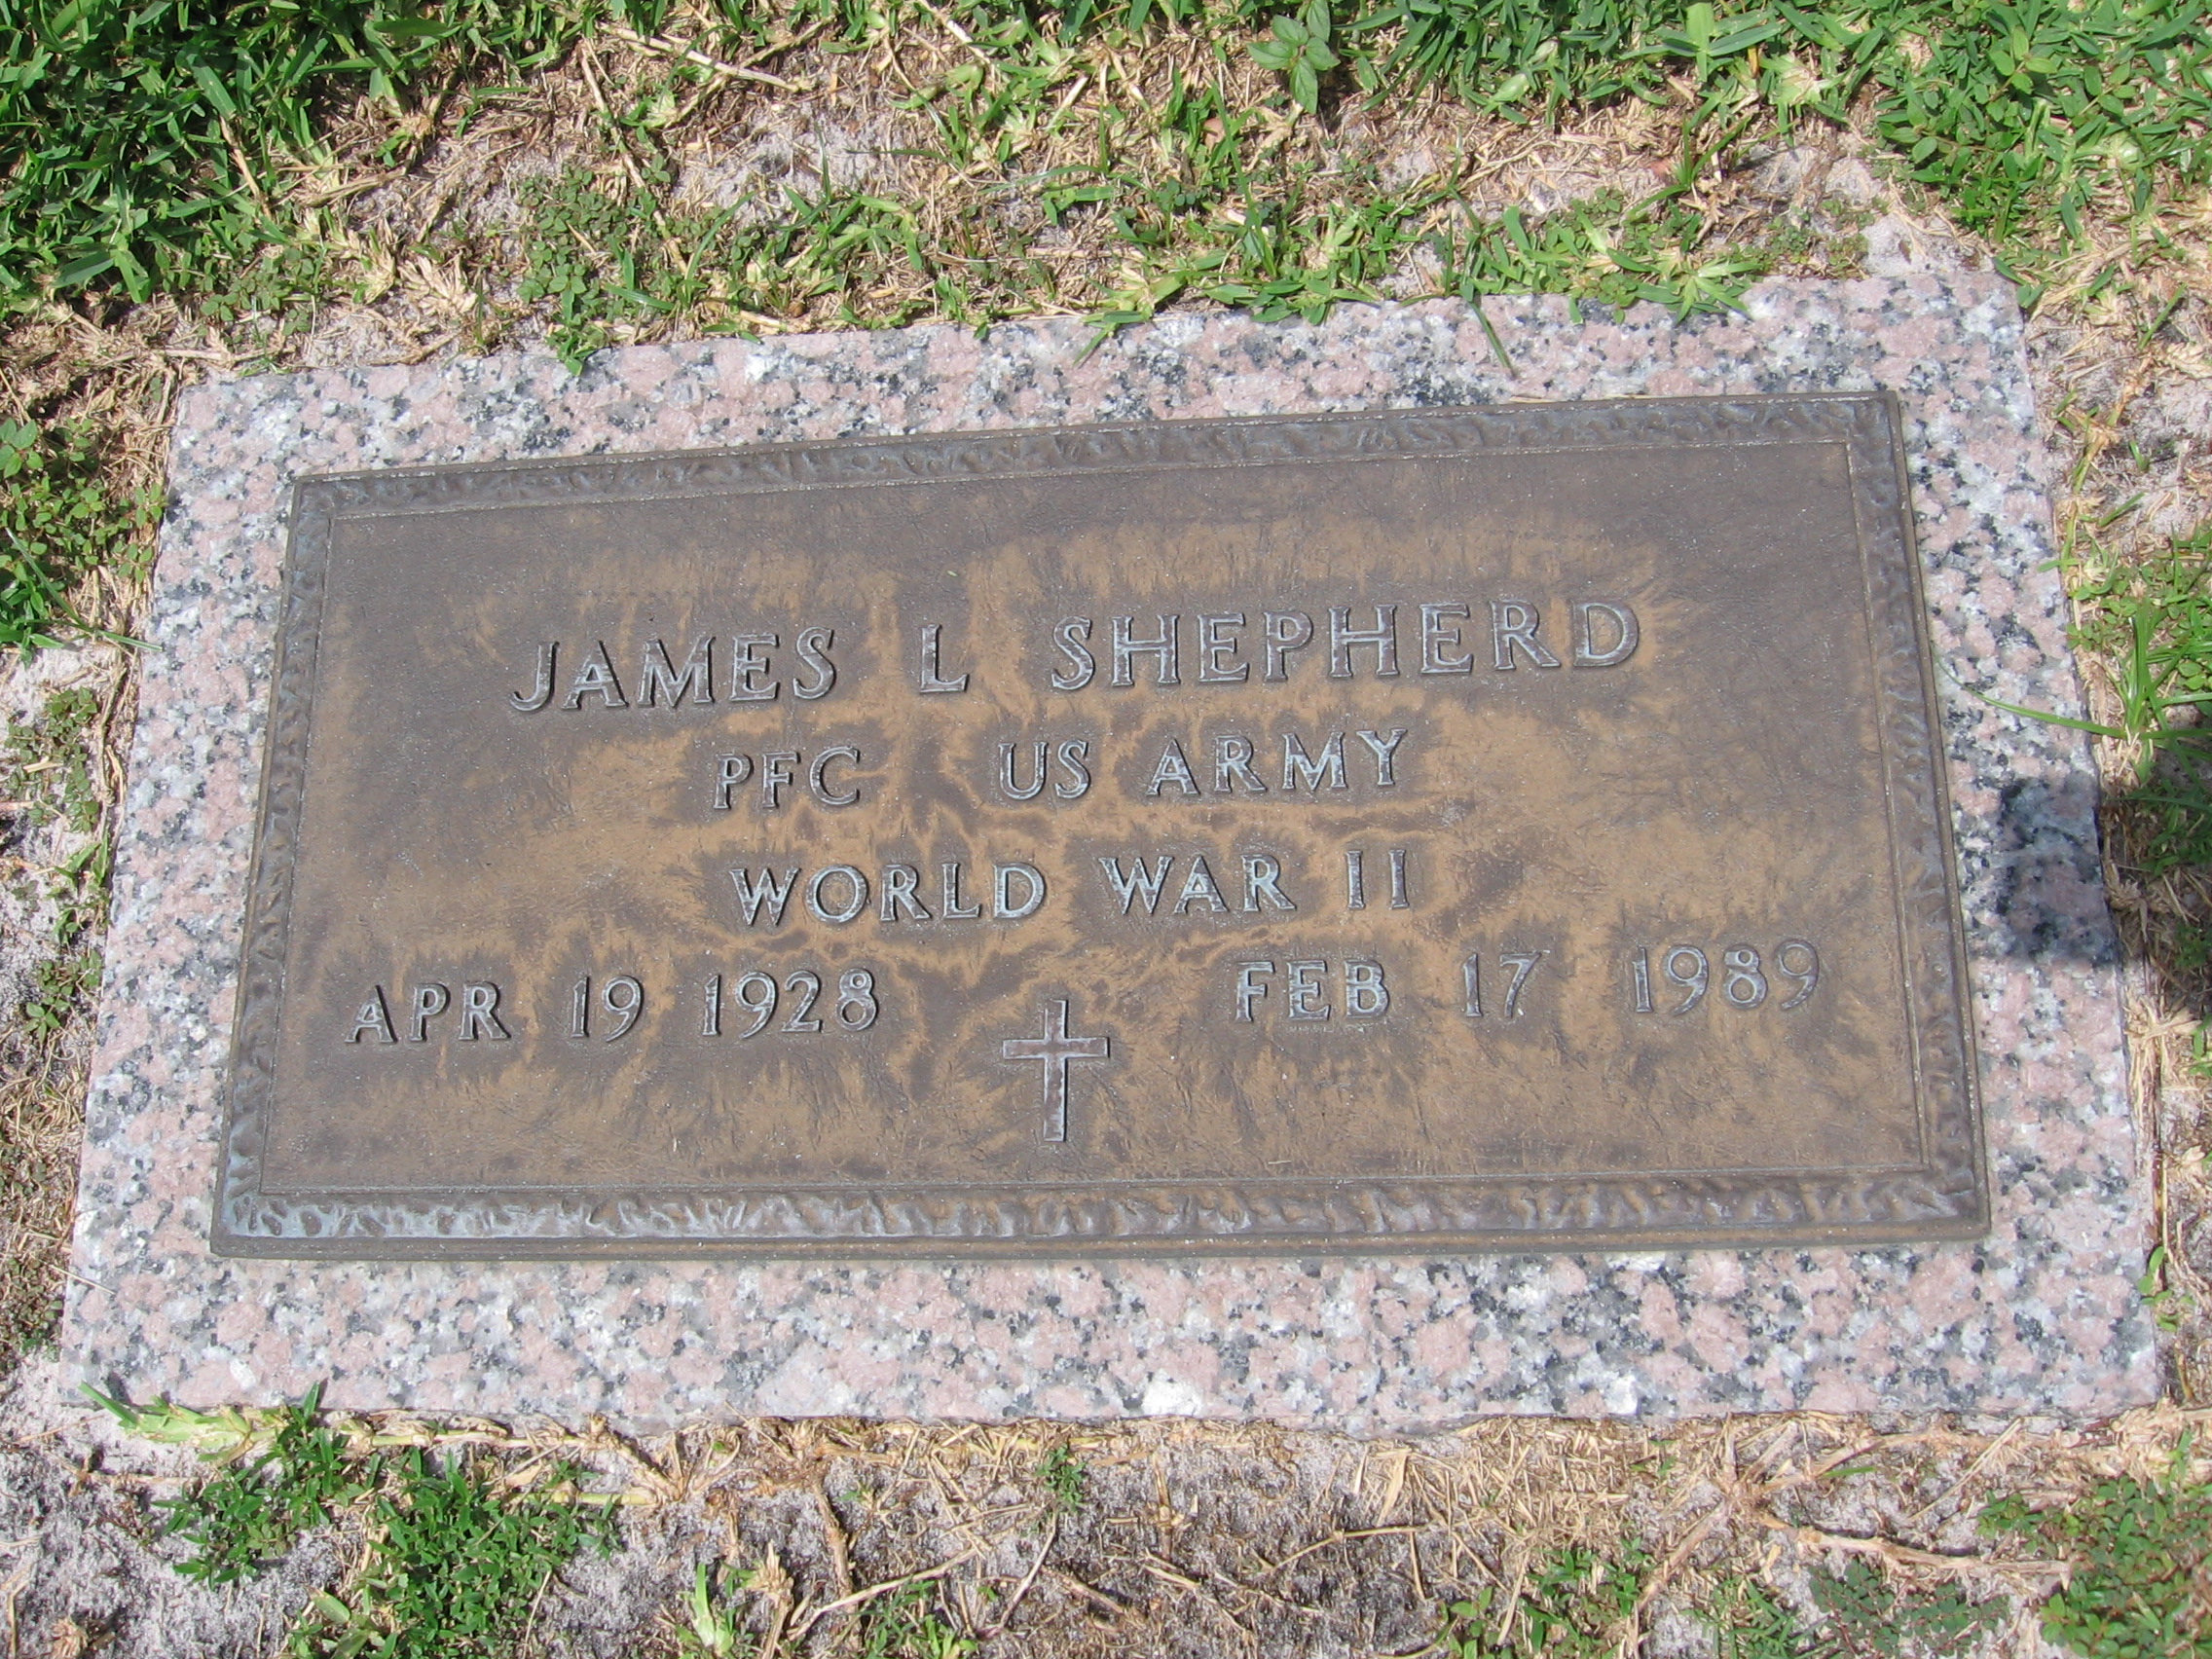 PFC James L Shepherd